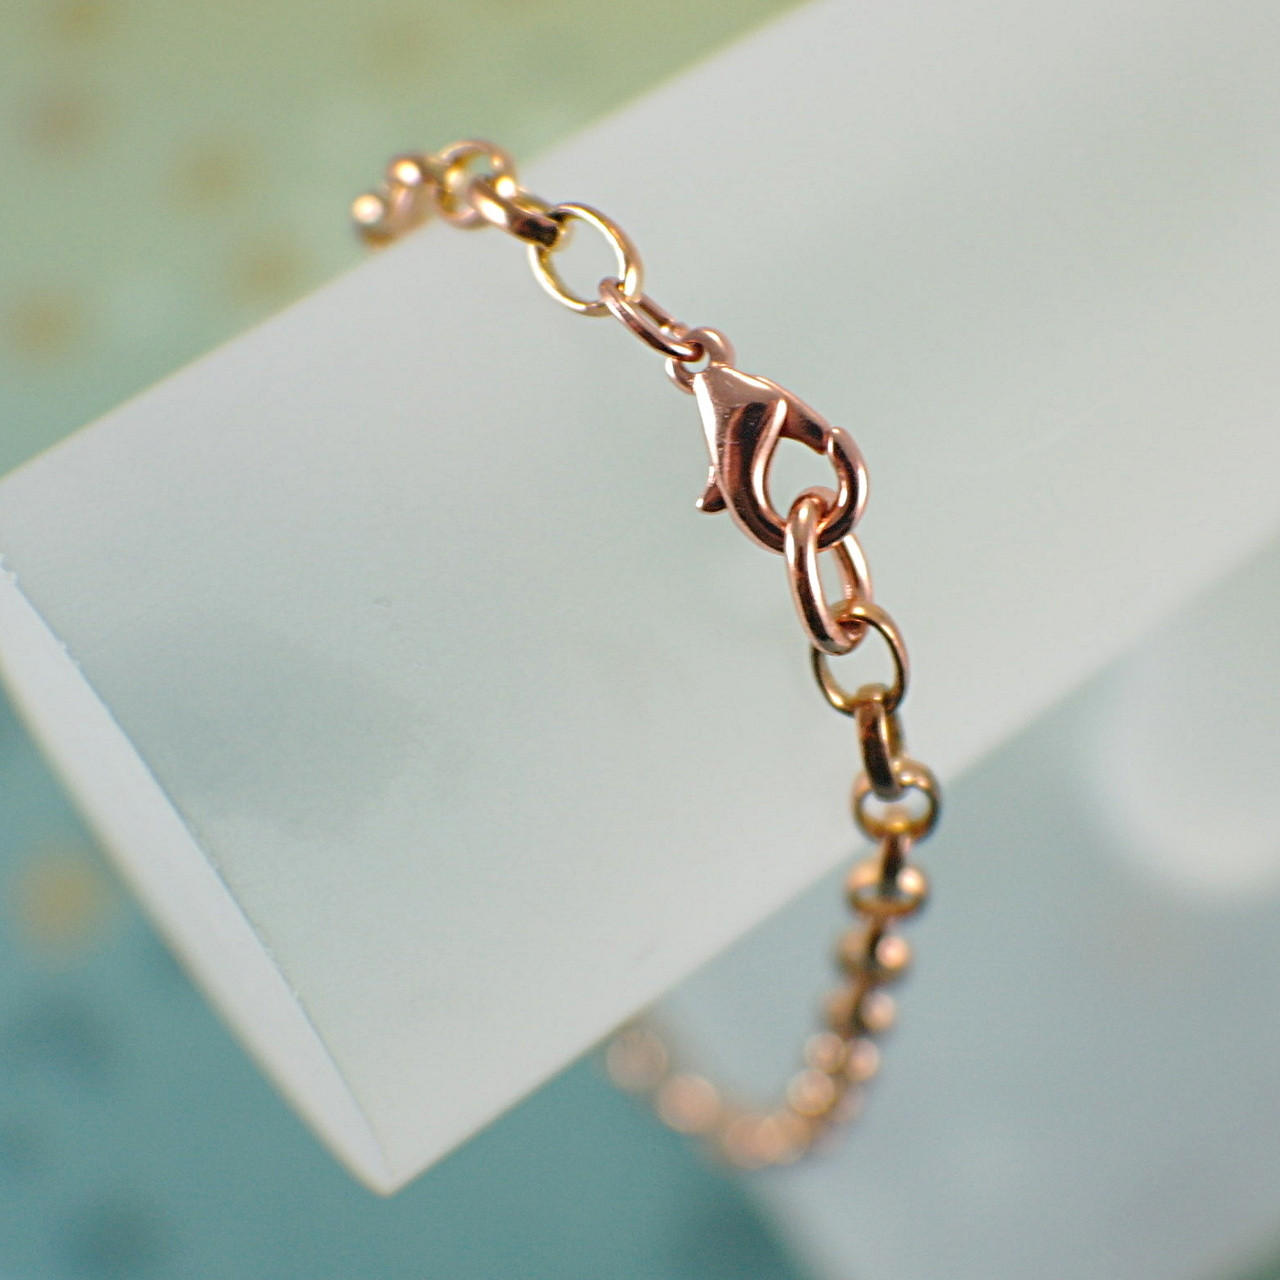 Copper chain bracelet or anklet 1.7mm thin